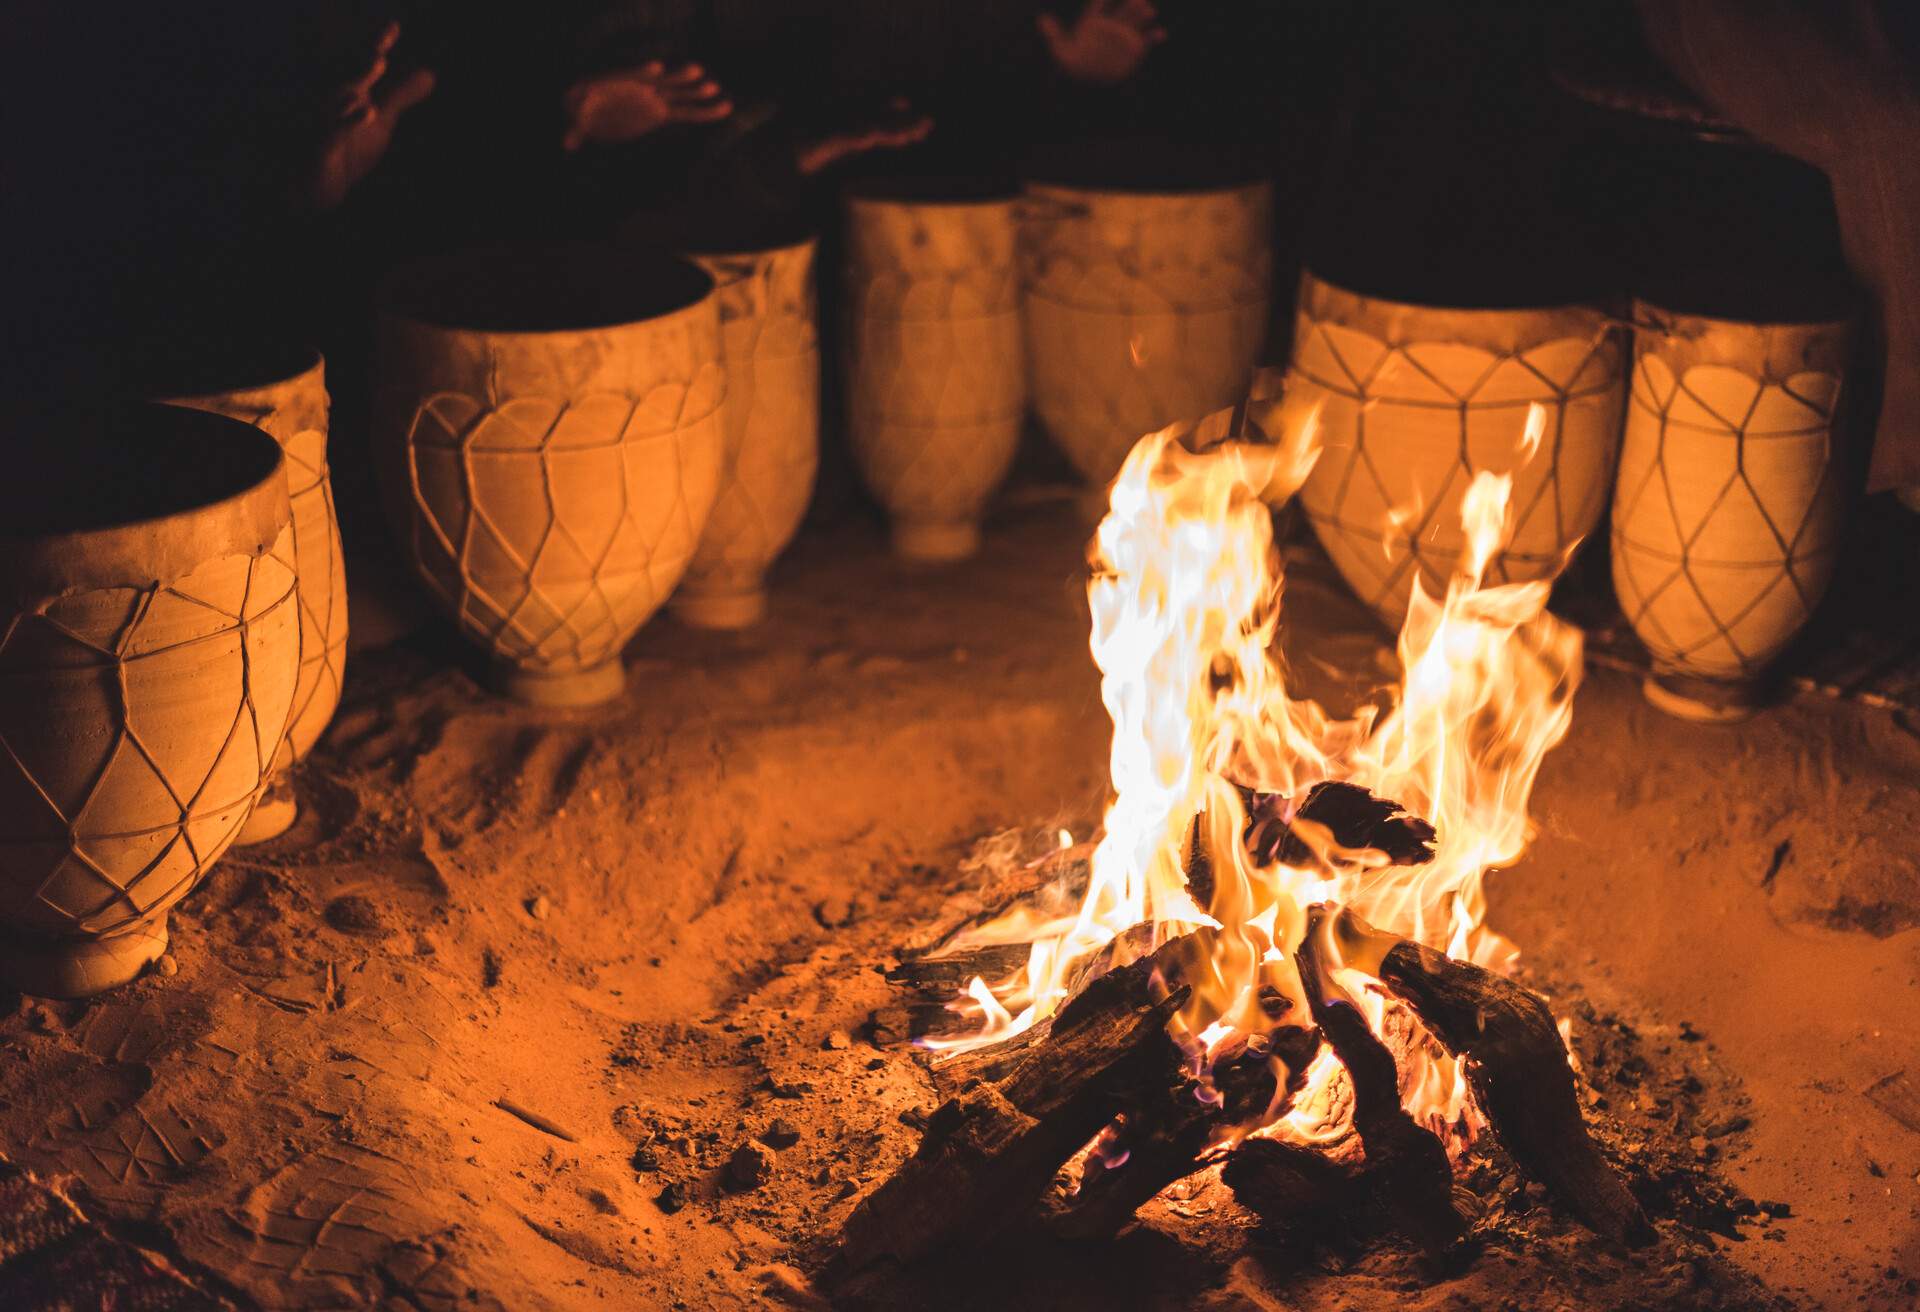 A blazing bonfire next to a set of single-head drums.